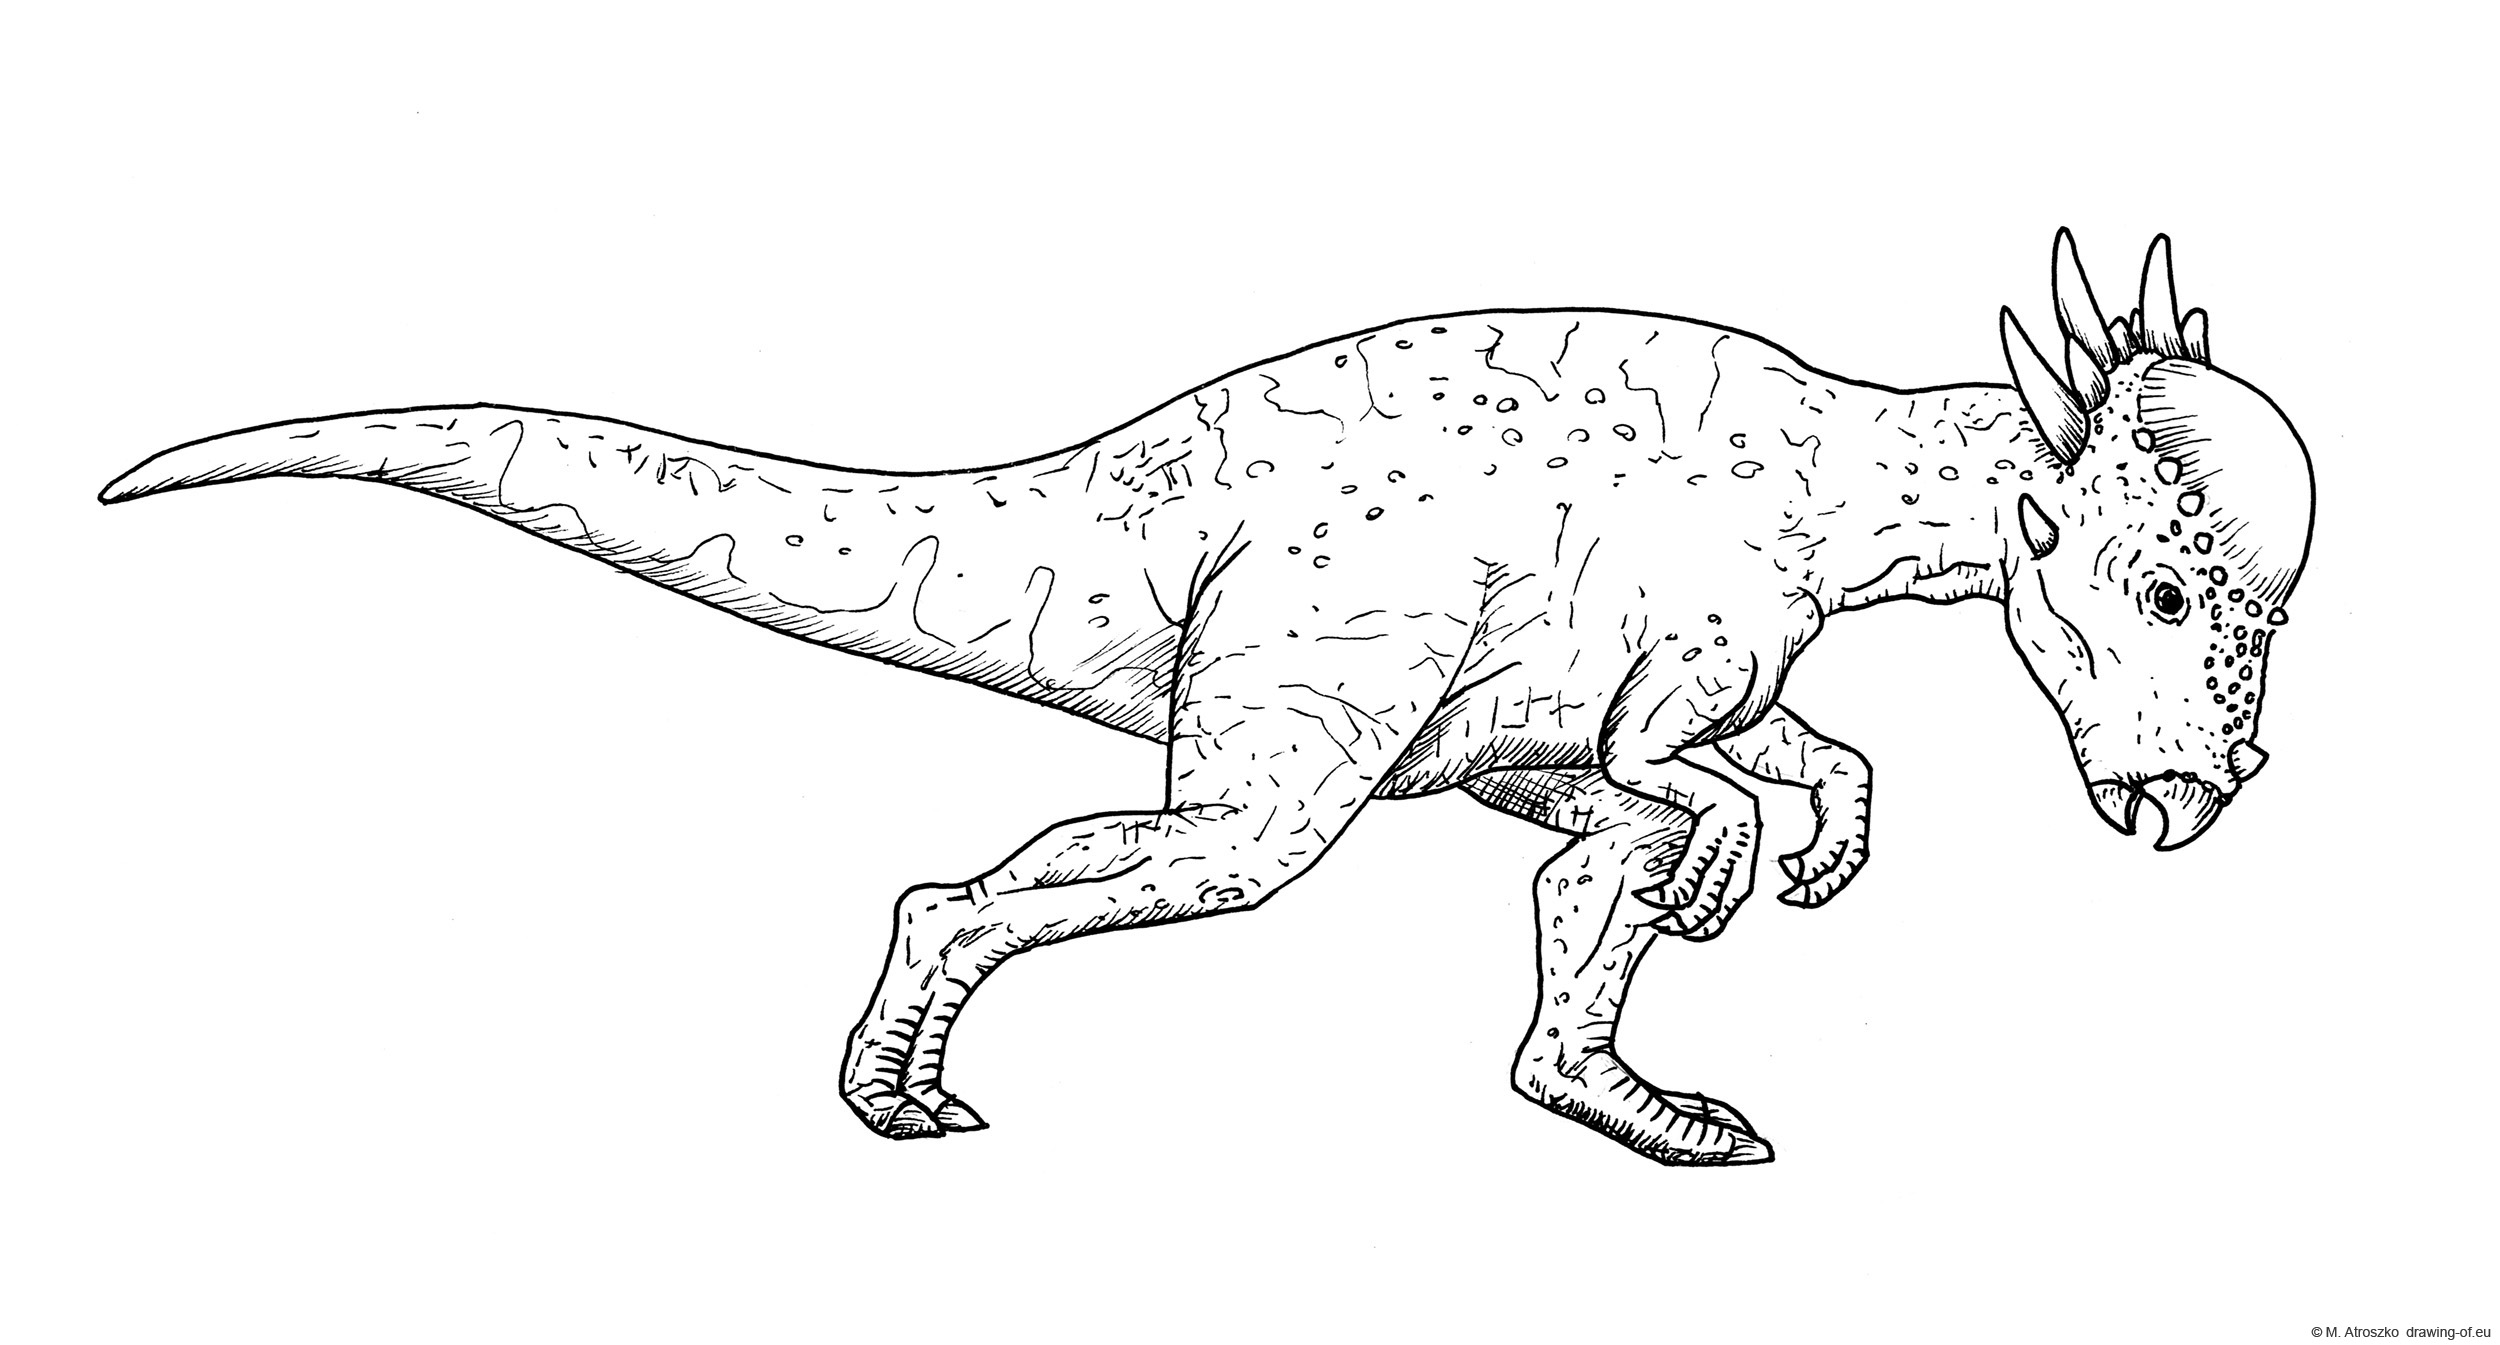 Stygimoloch drawing